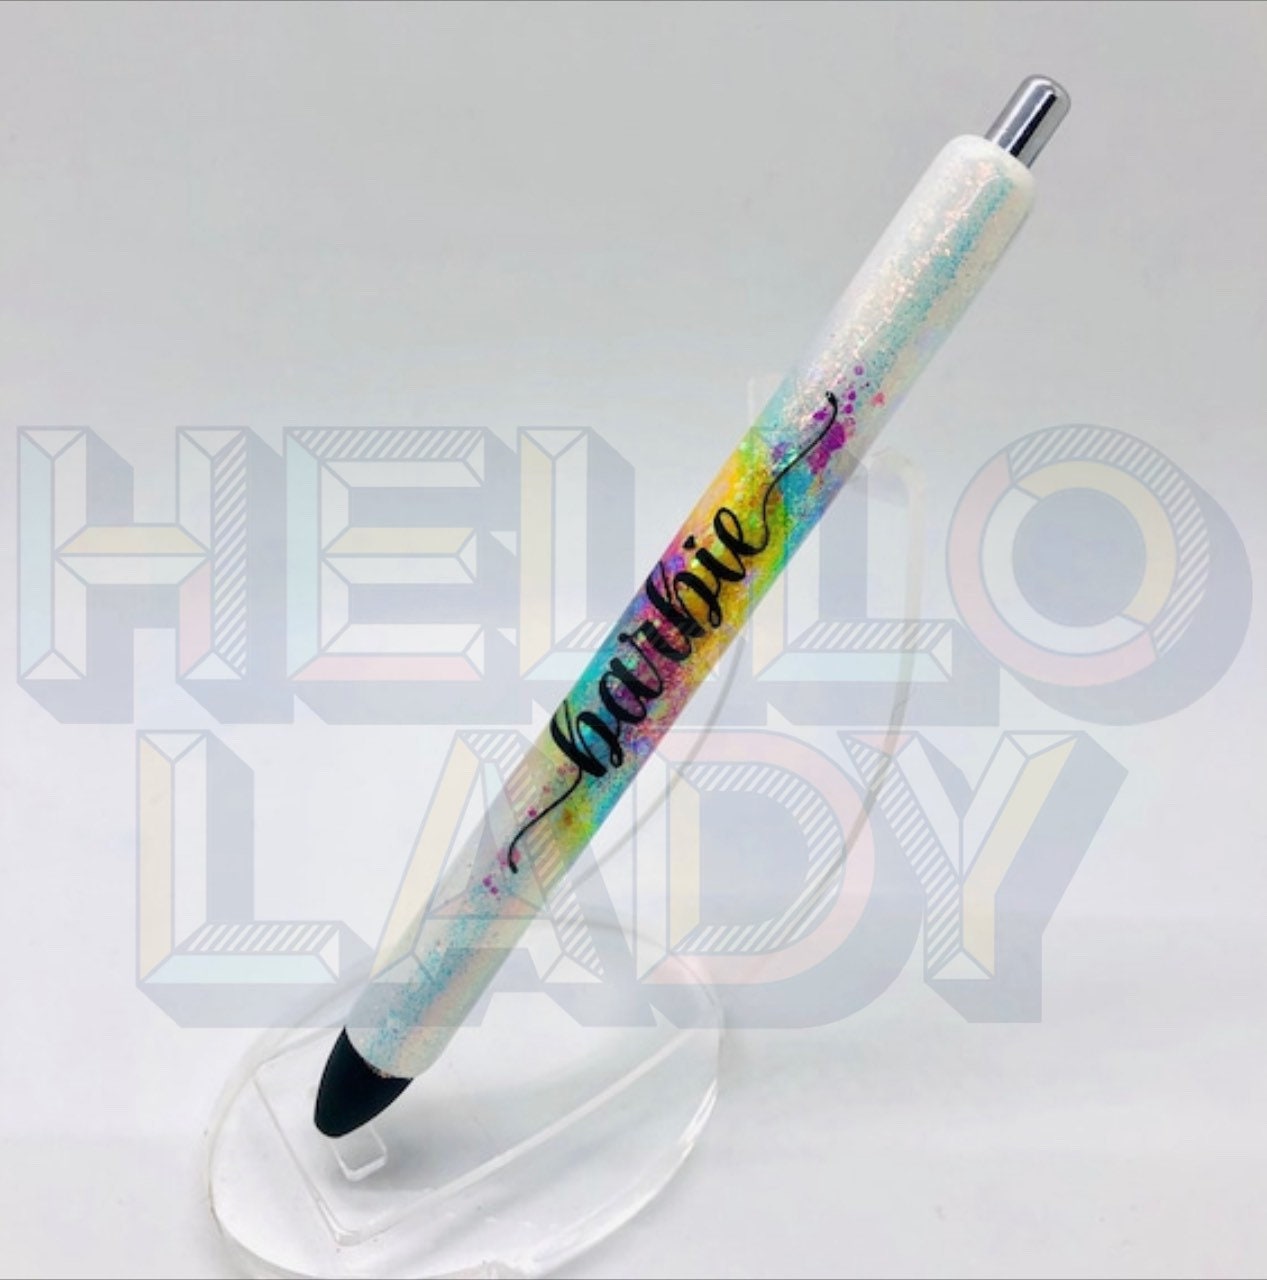 Sakura Gelly Roll White Gel Pen Medium 08 Art & Craft Gel Pen